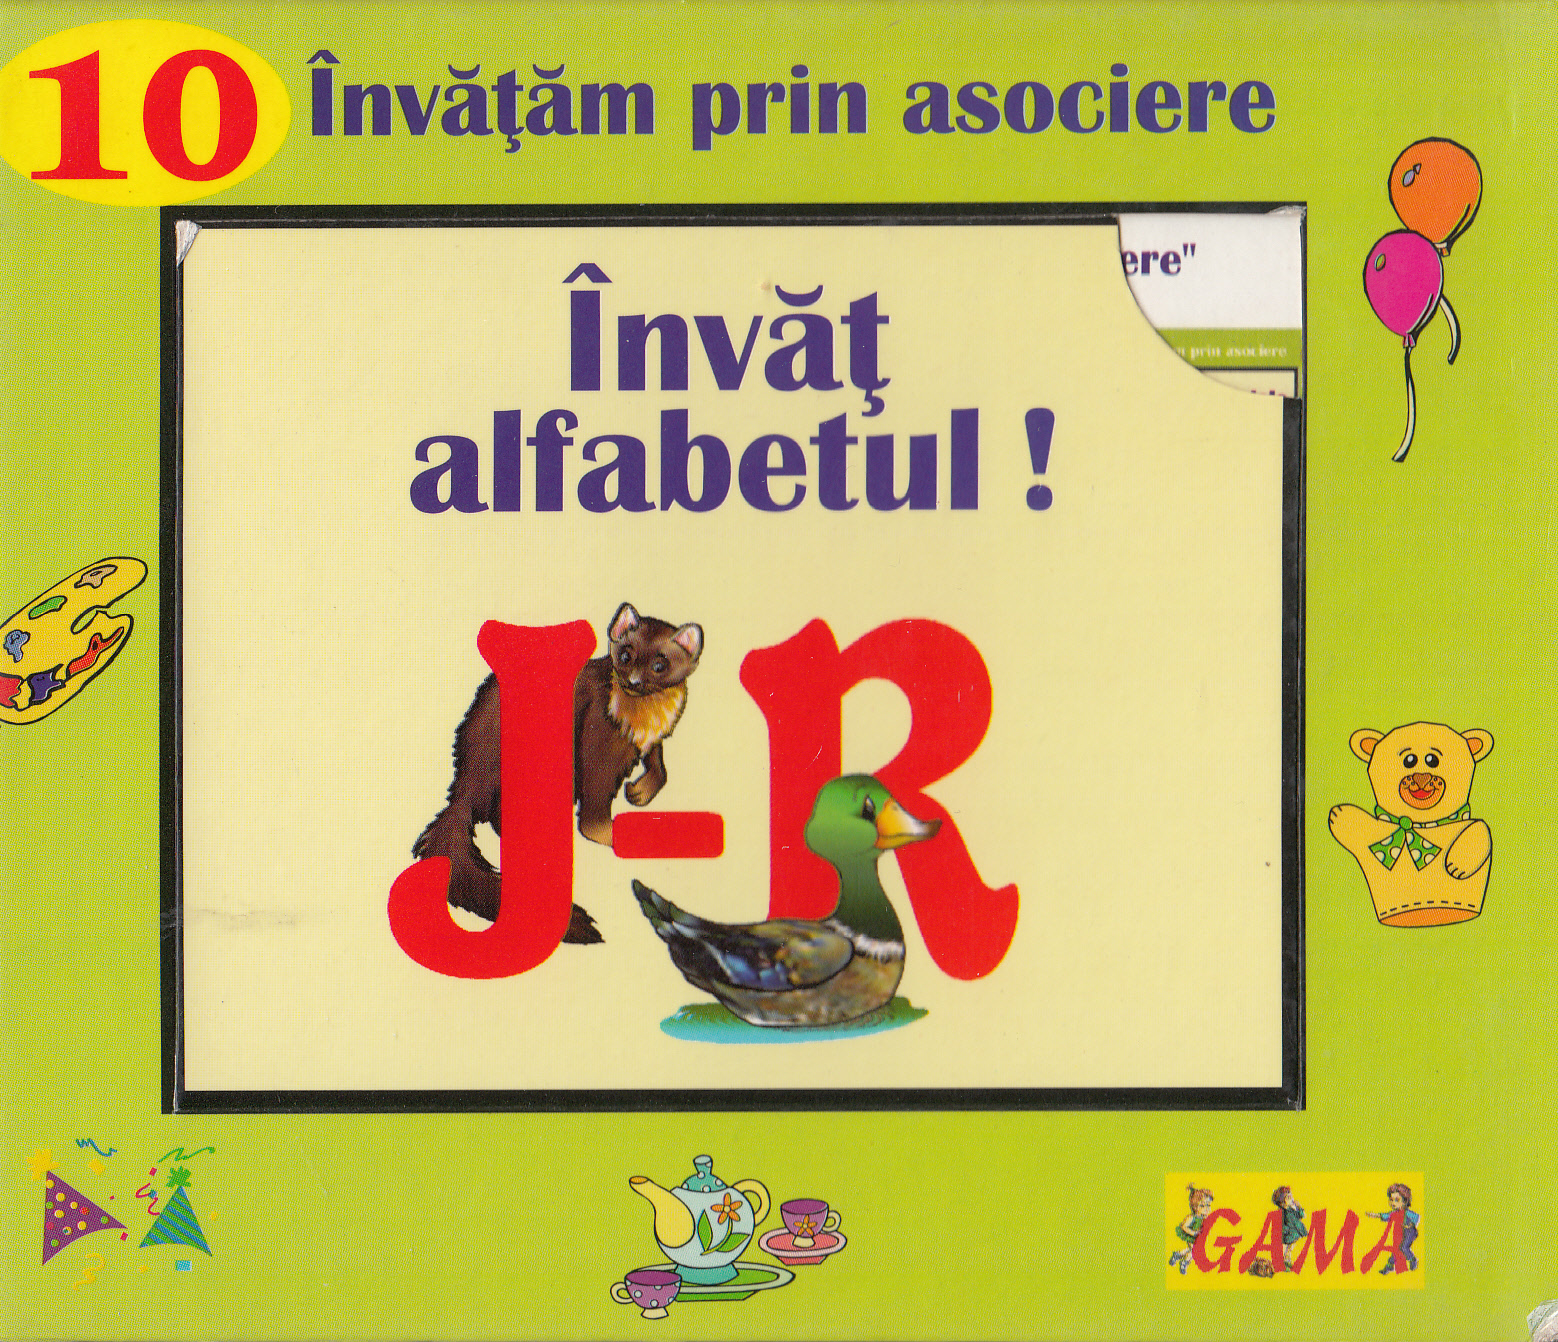 Invat alfabetul: J-R - Invatam prin asociere